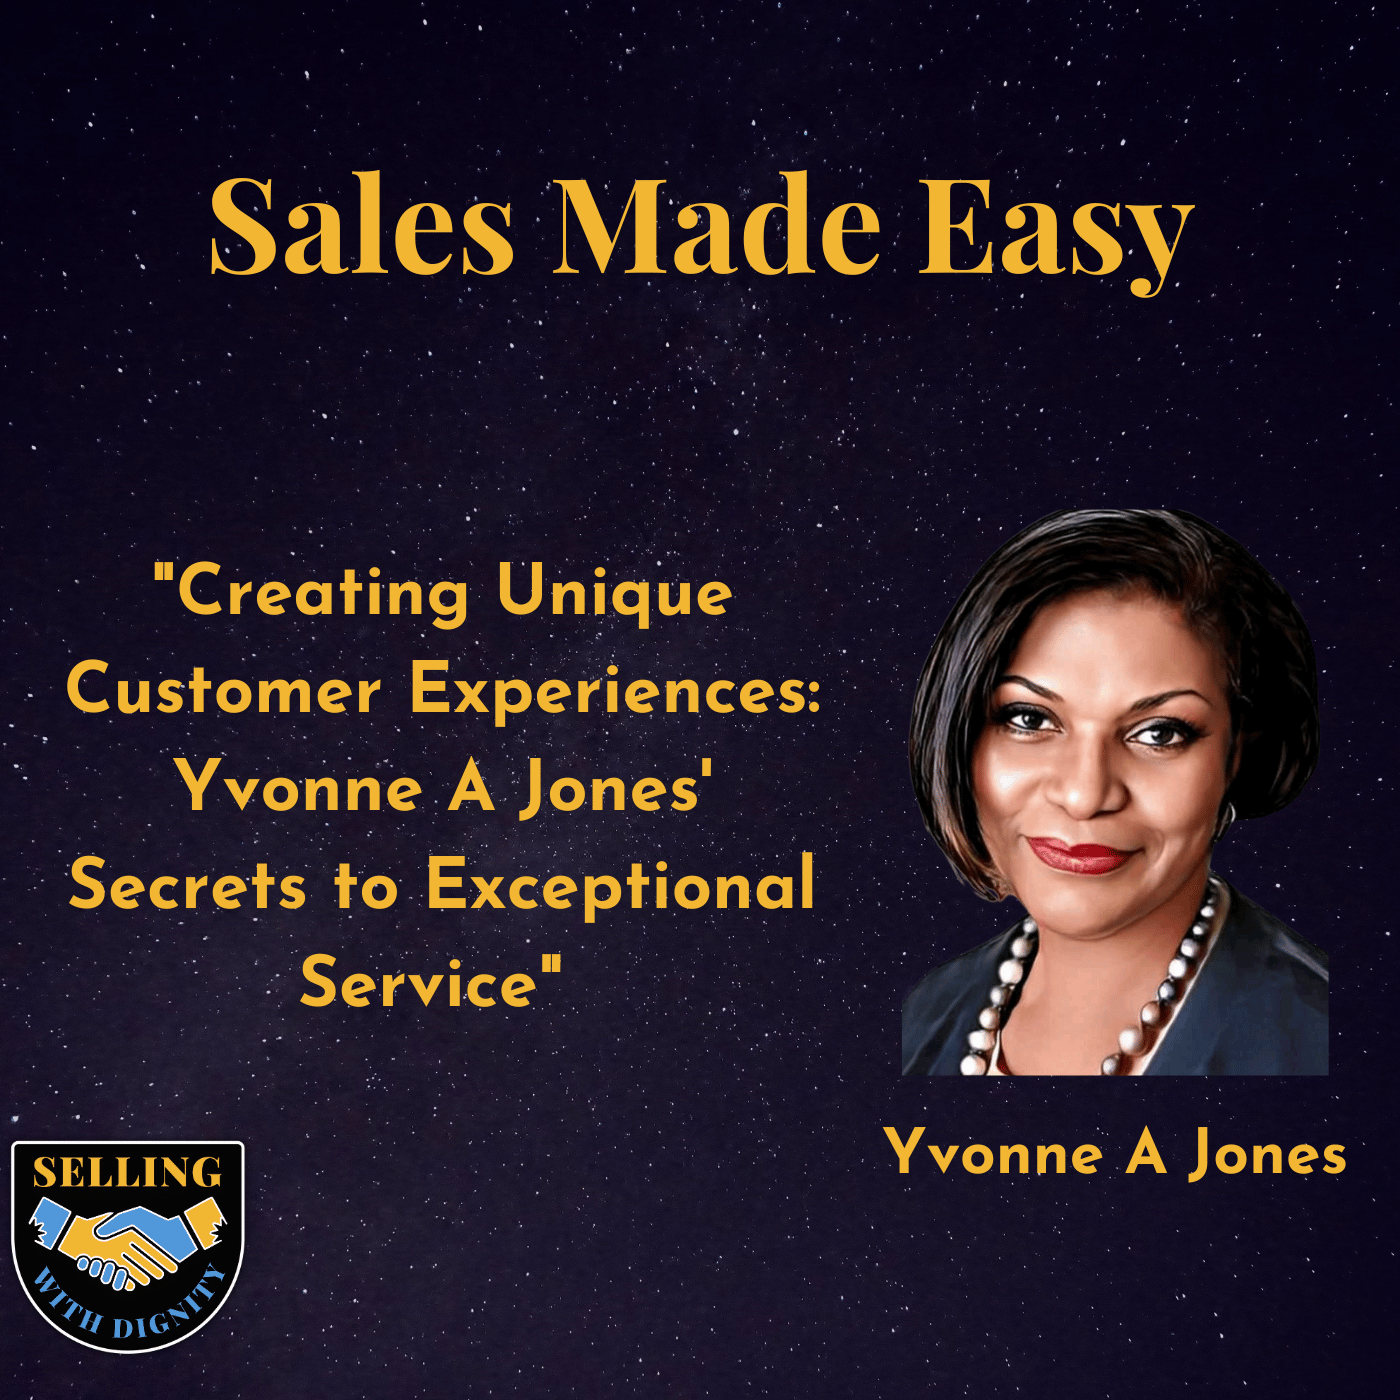 “Creating Unique Customer Experiences: Yvonne A Jones’ Secrets to Exceptional Service”